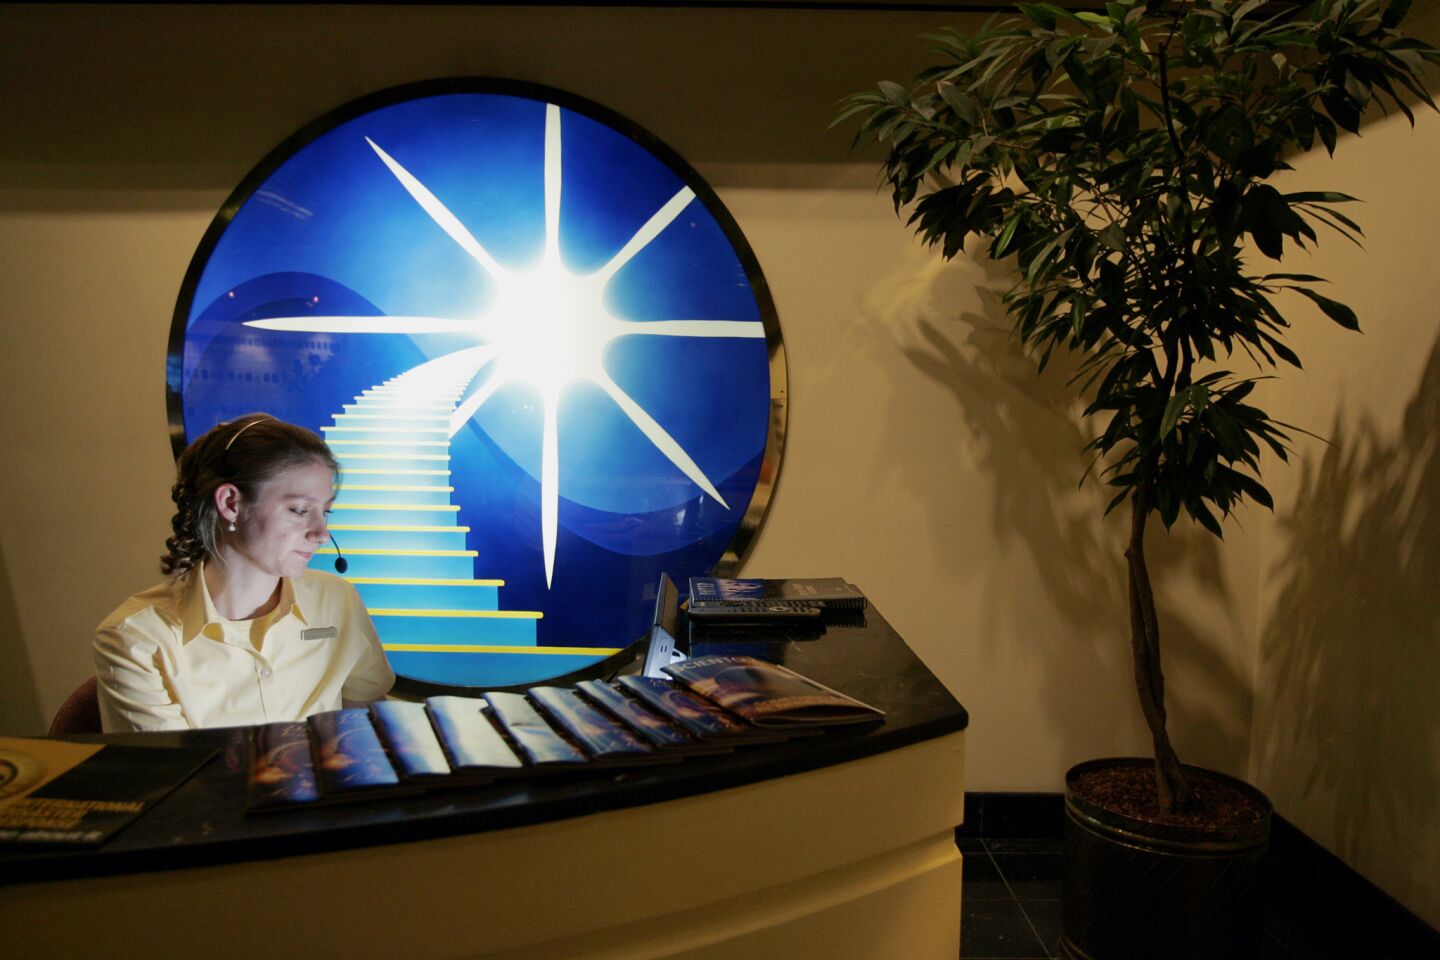 Receptionist Charlotte Heldt at Golden Era Productions. The artwork behind her depicts Scientologys Bridge to Total Freedom, the church's path to enlightenment.